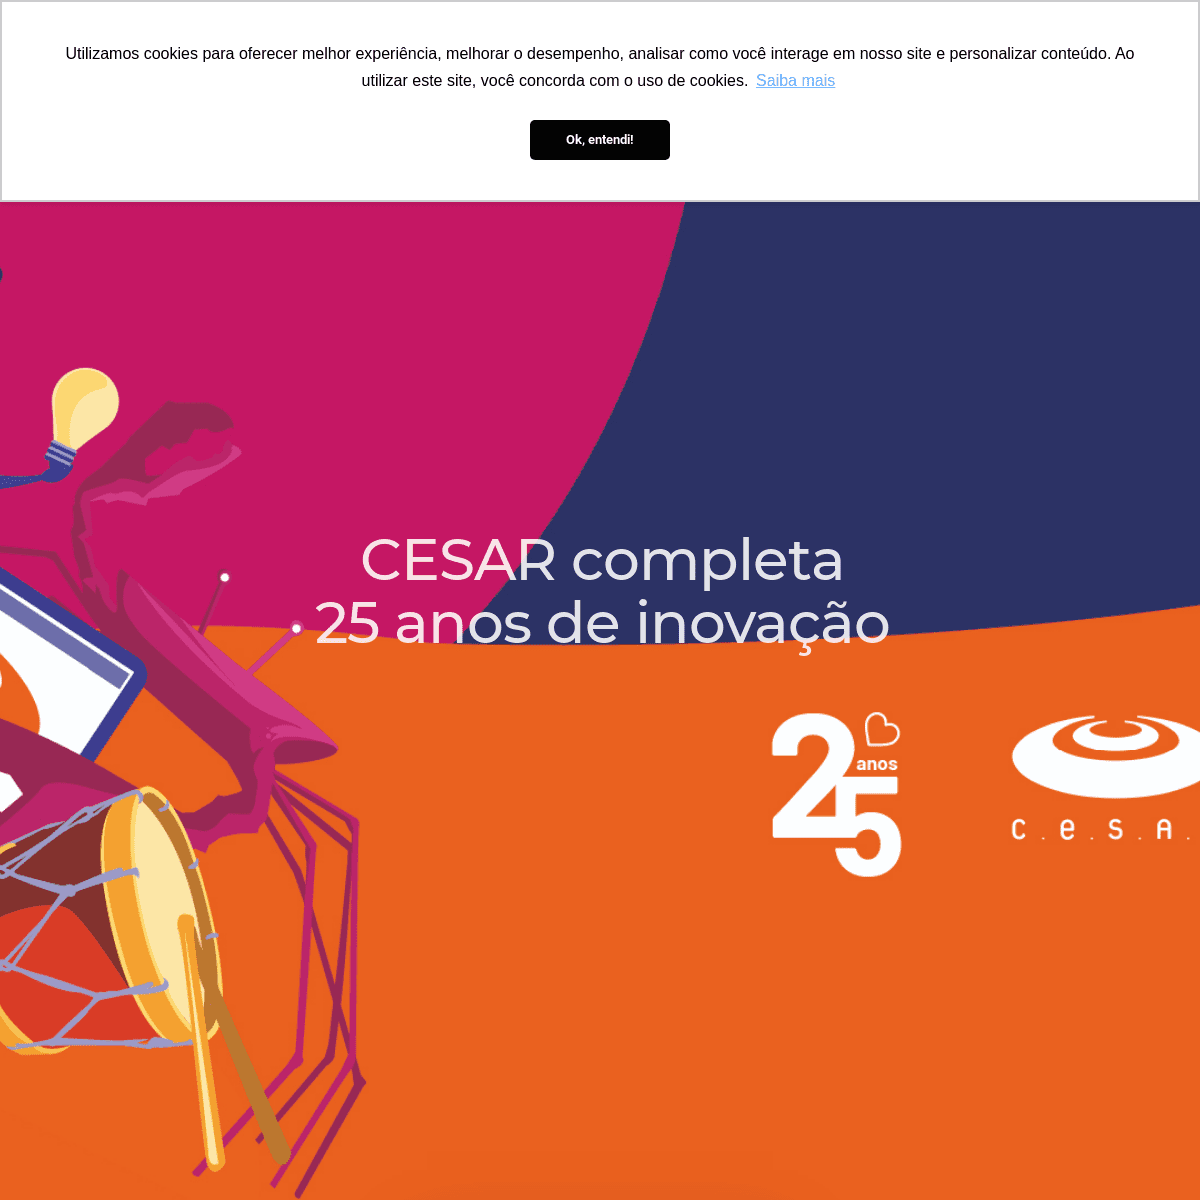 A complete backup of https://cesar.org.br